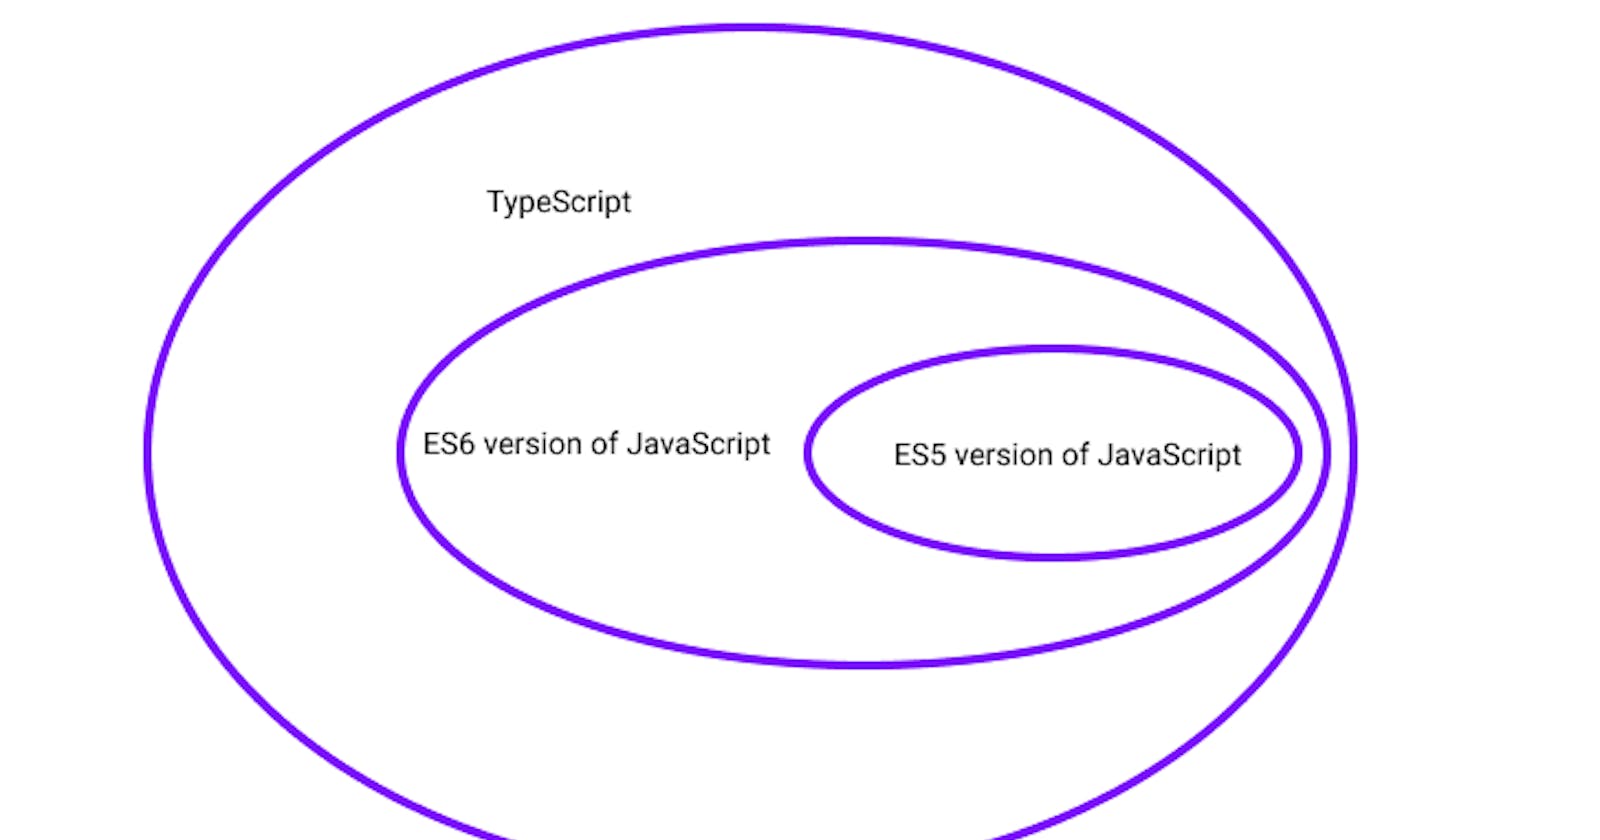 JavaScript Vs TypeScript